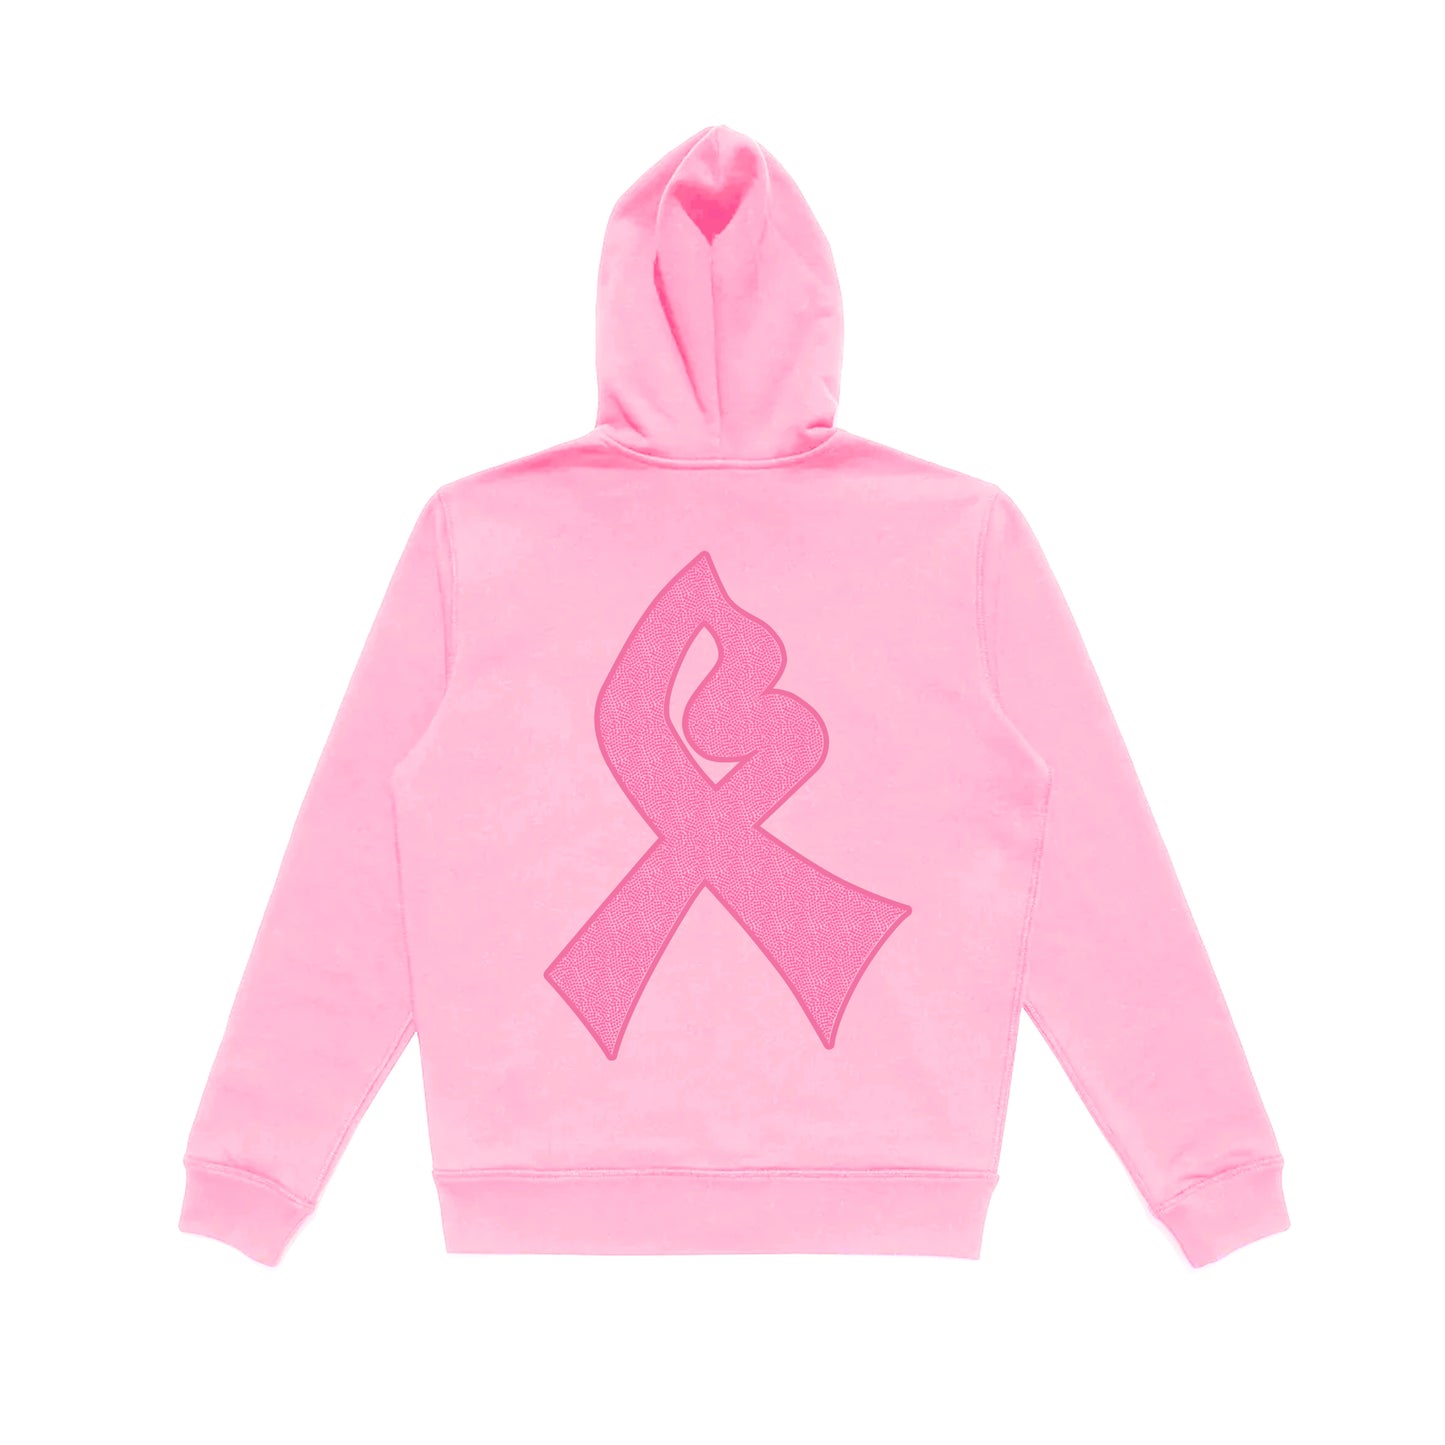 Breast Cancer Awareness Jacket